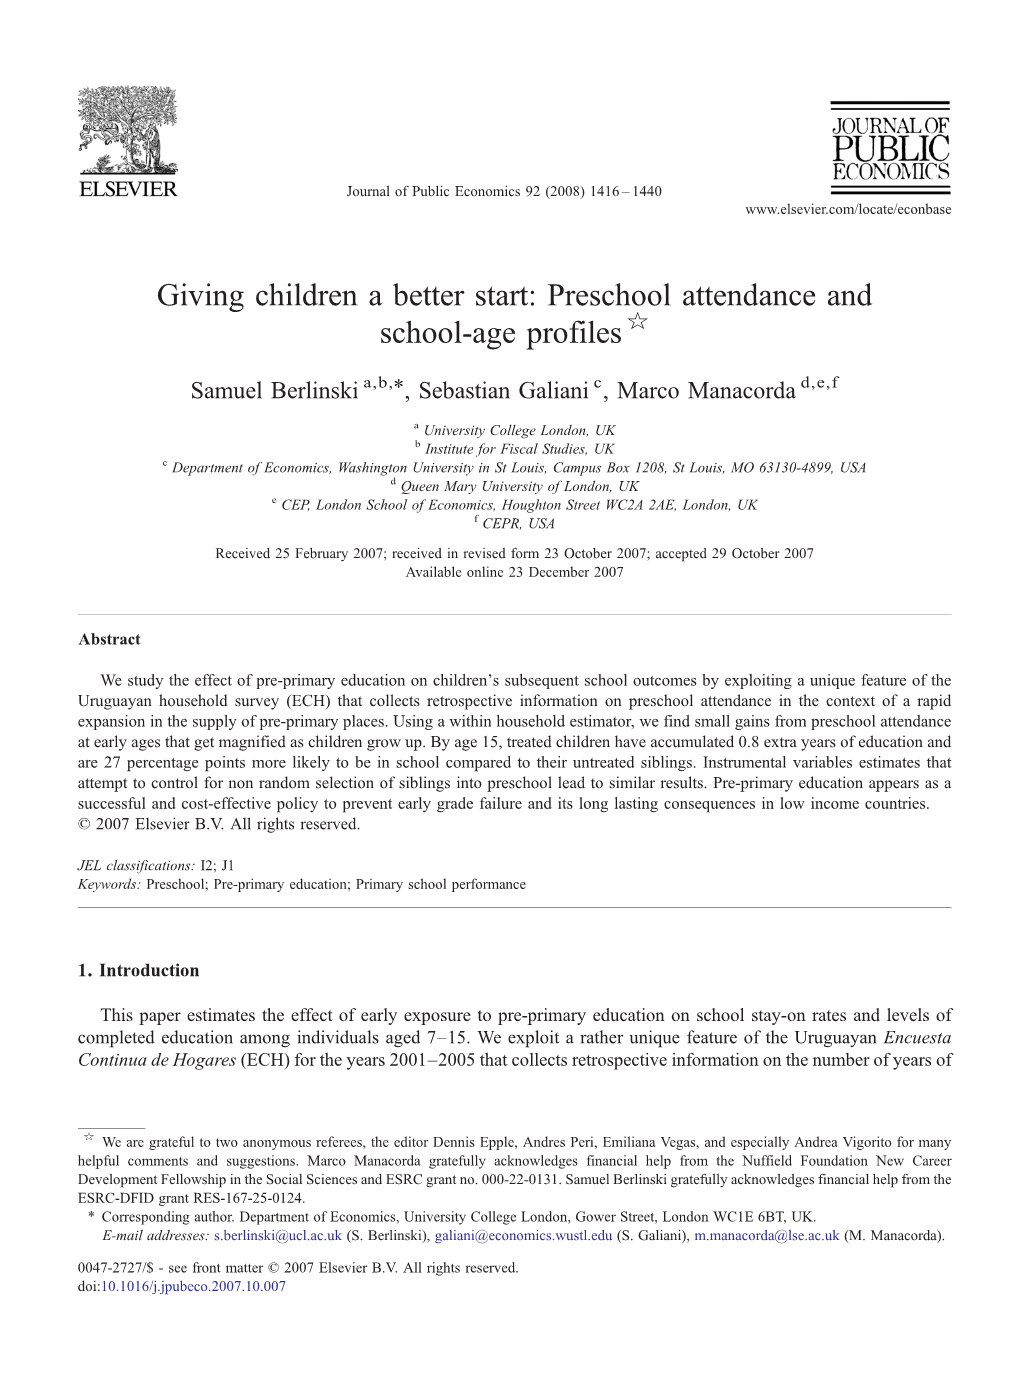 Giving Children a Better Start: Preschool Attendance and School-Age Profiles ☆ ⁎ Samuel Berlinski A,B, , Sebastian Galiani C, Marco Manacorda D,E,F